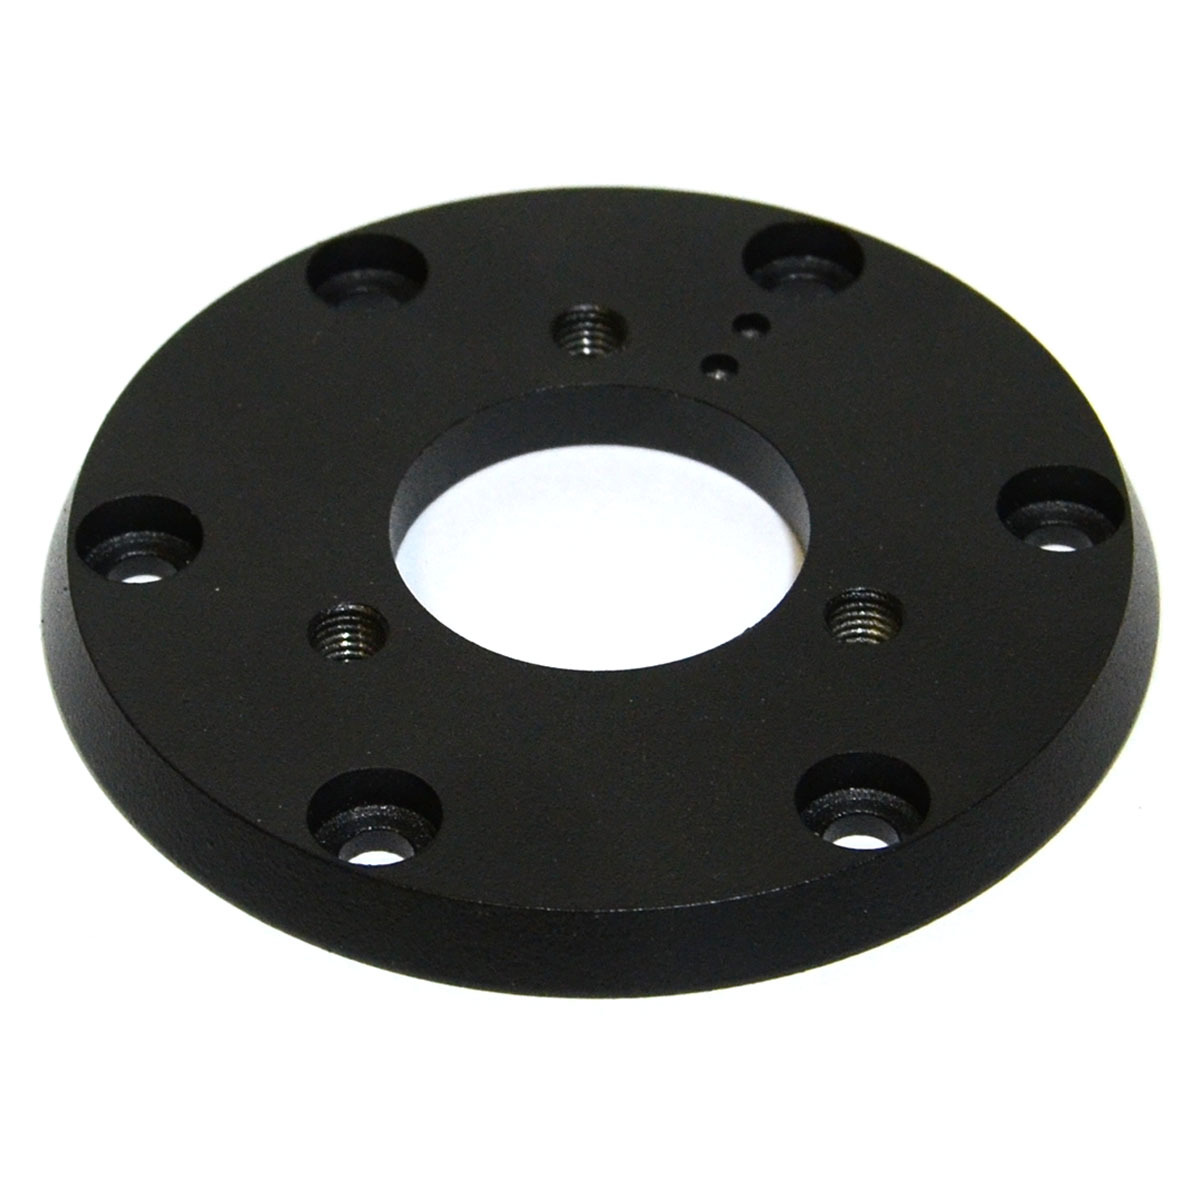 Adaptor Plate 3 to 6 hole Steering Wheel